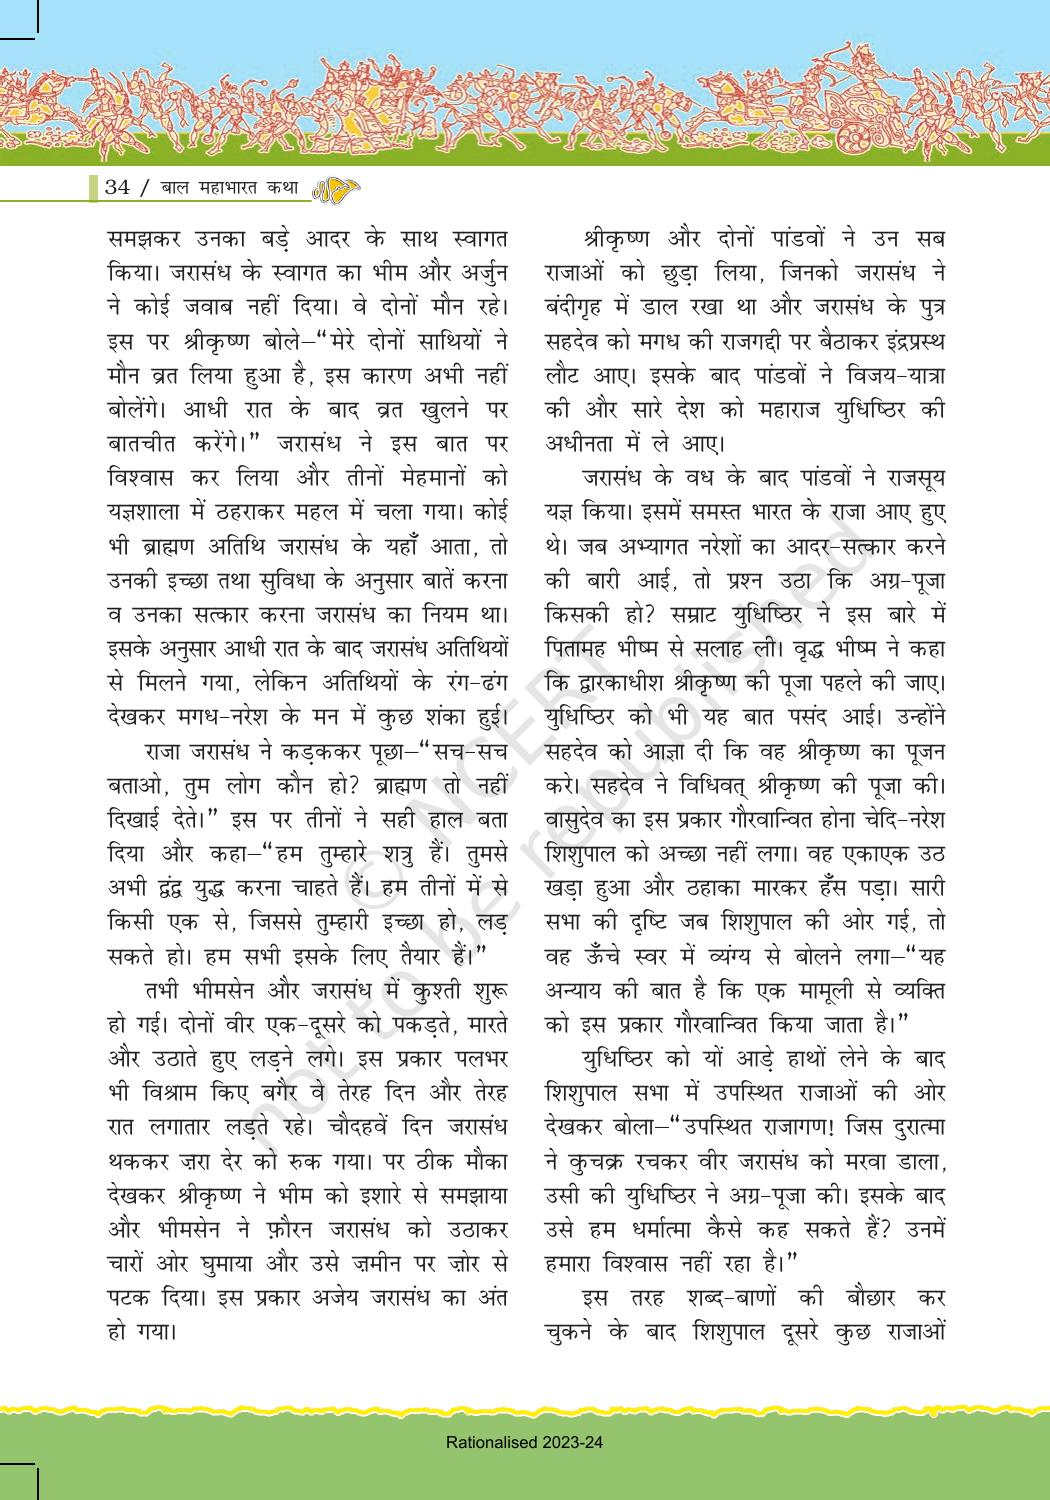 NCERT Book for Class 7 Hindi: Chapter 1-बाल महाभारत कथा - Page 34